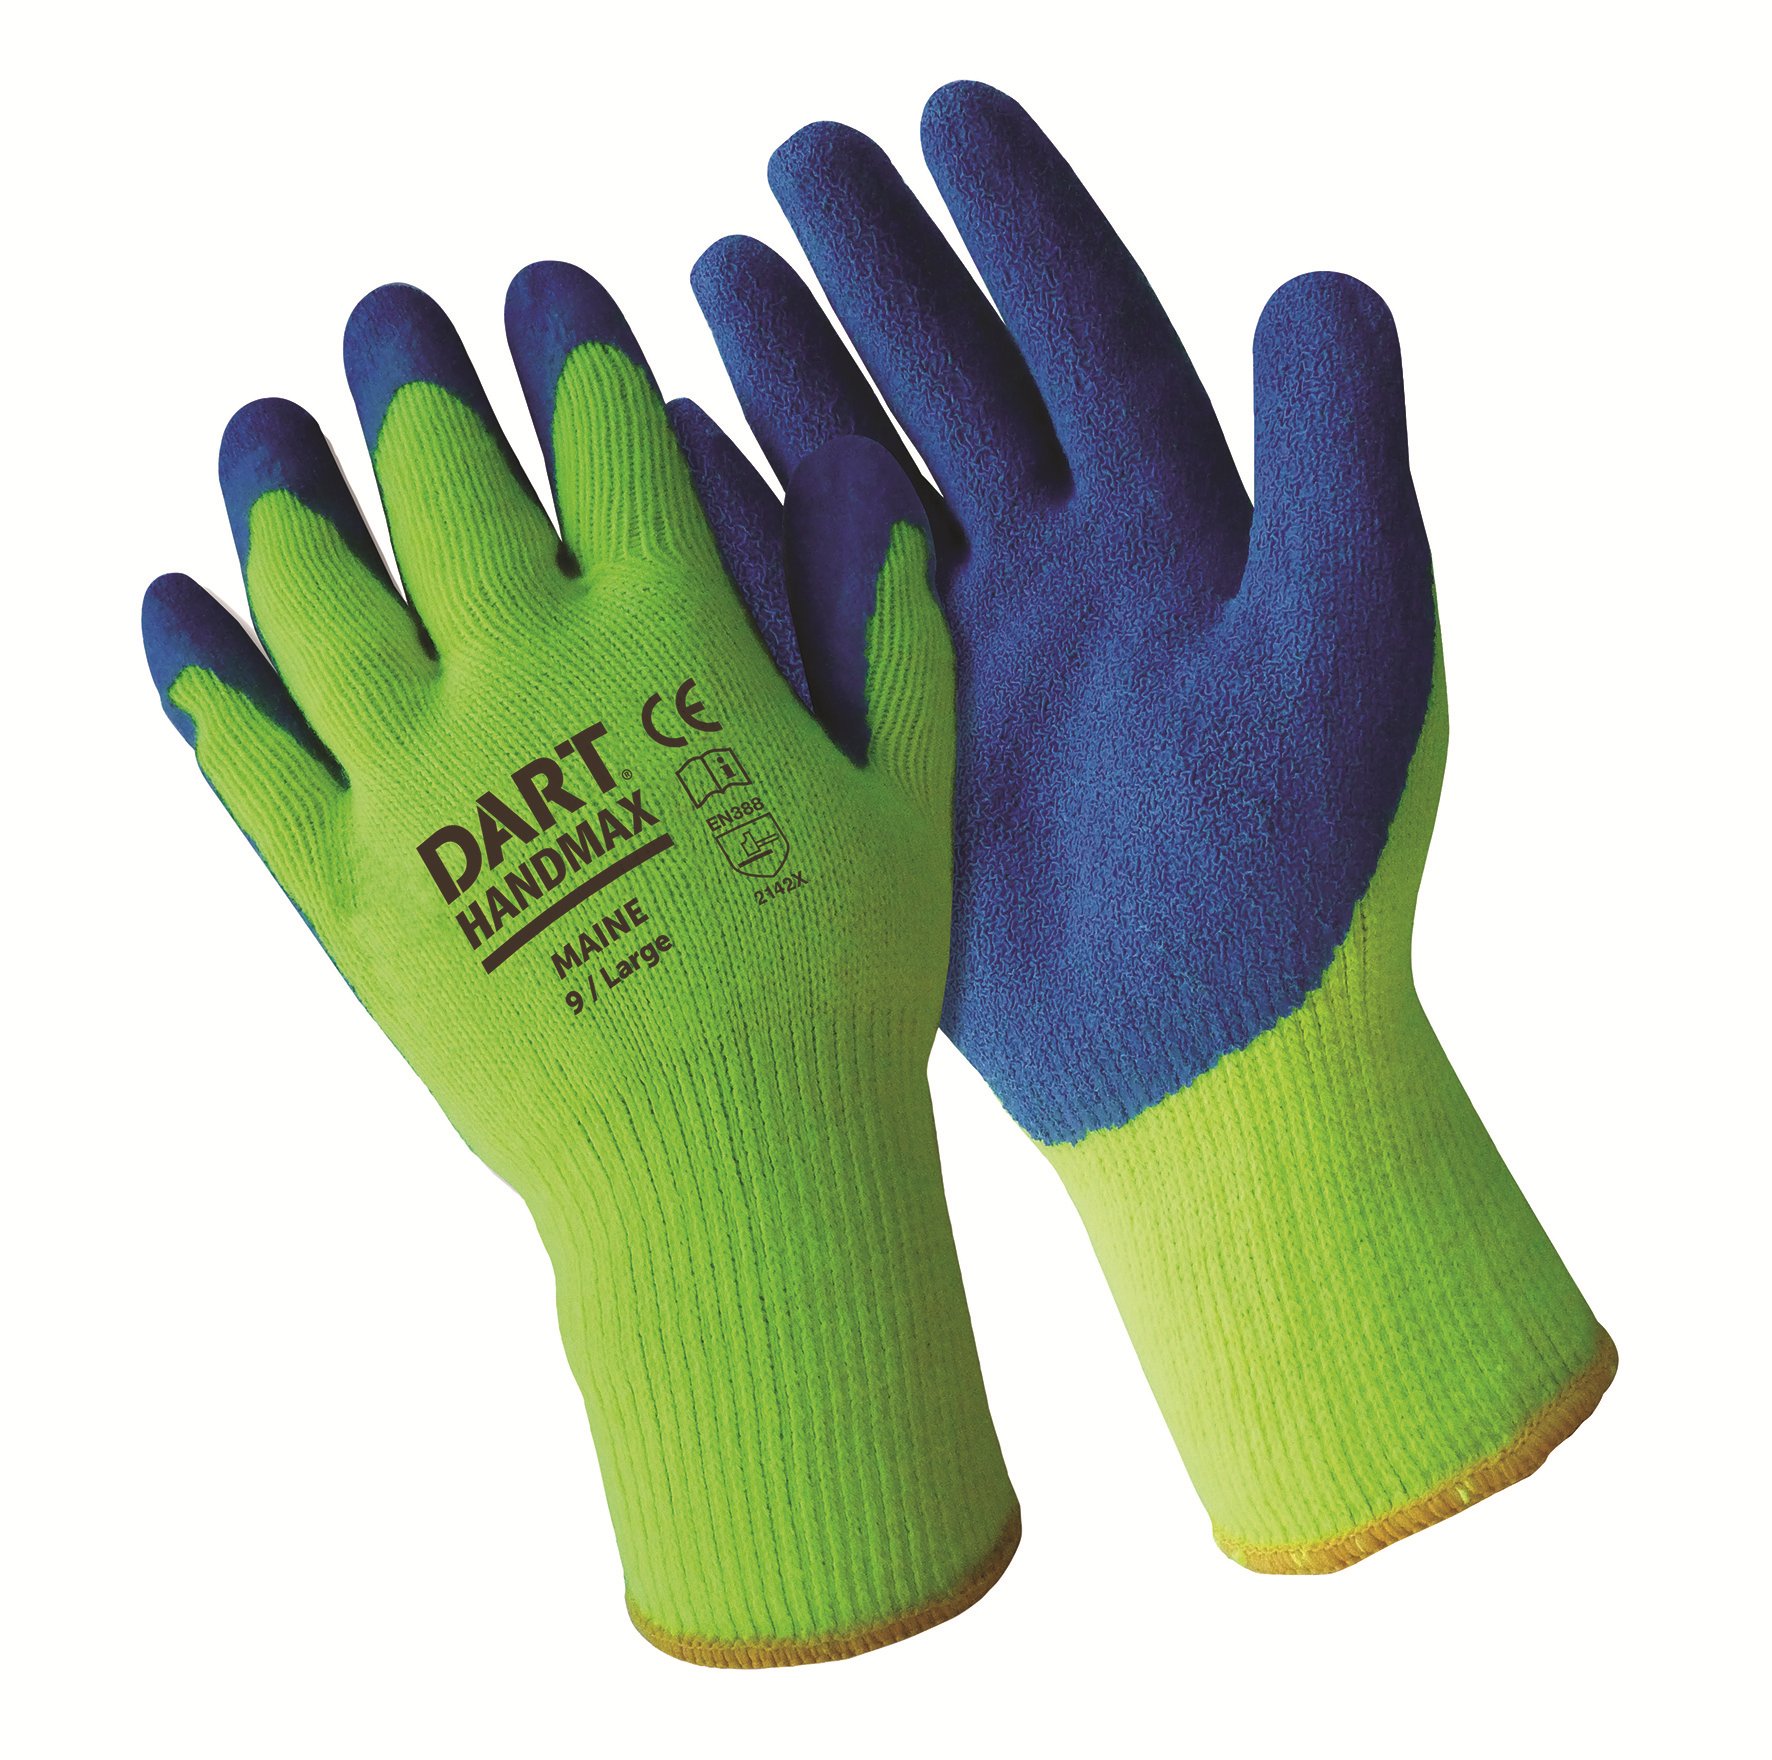 10 x HANDMAX PU Safety Work Dexterity Grip Builders Gloves 